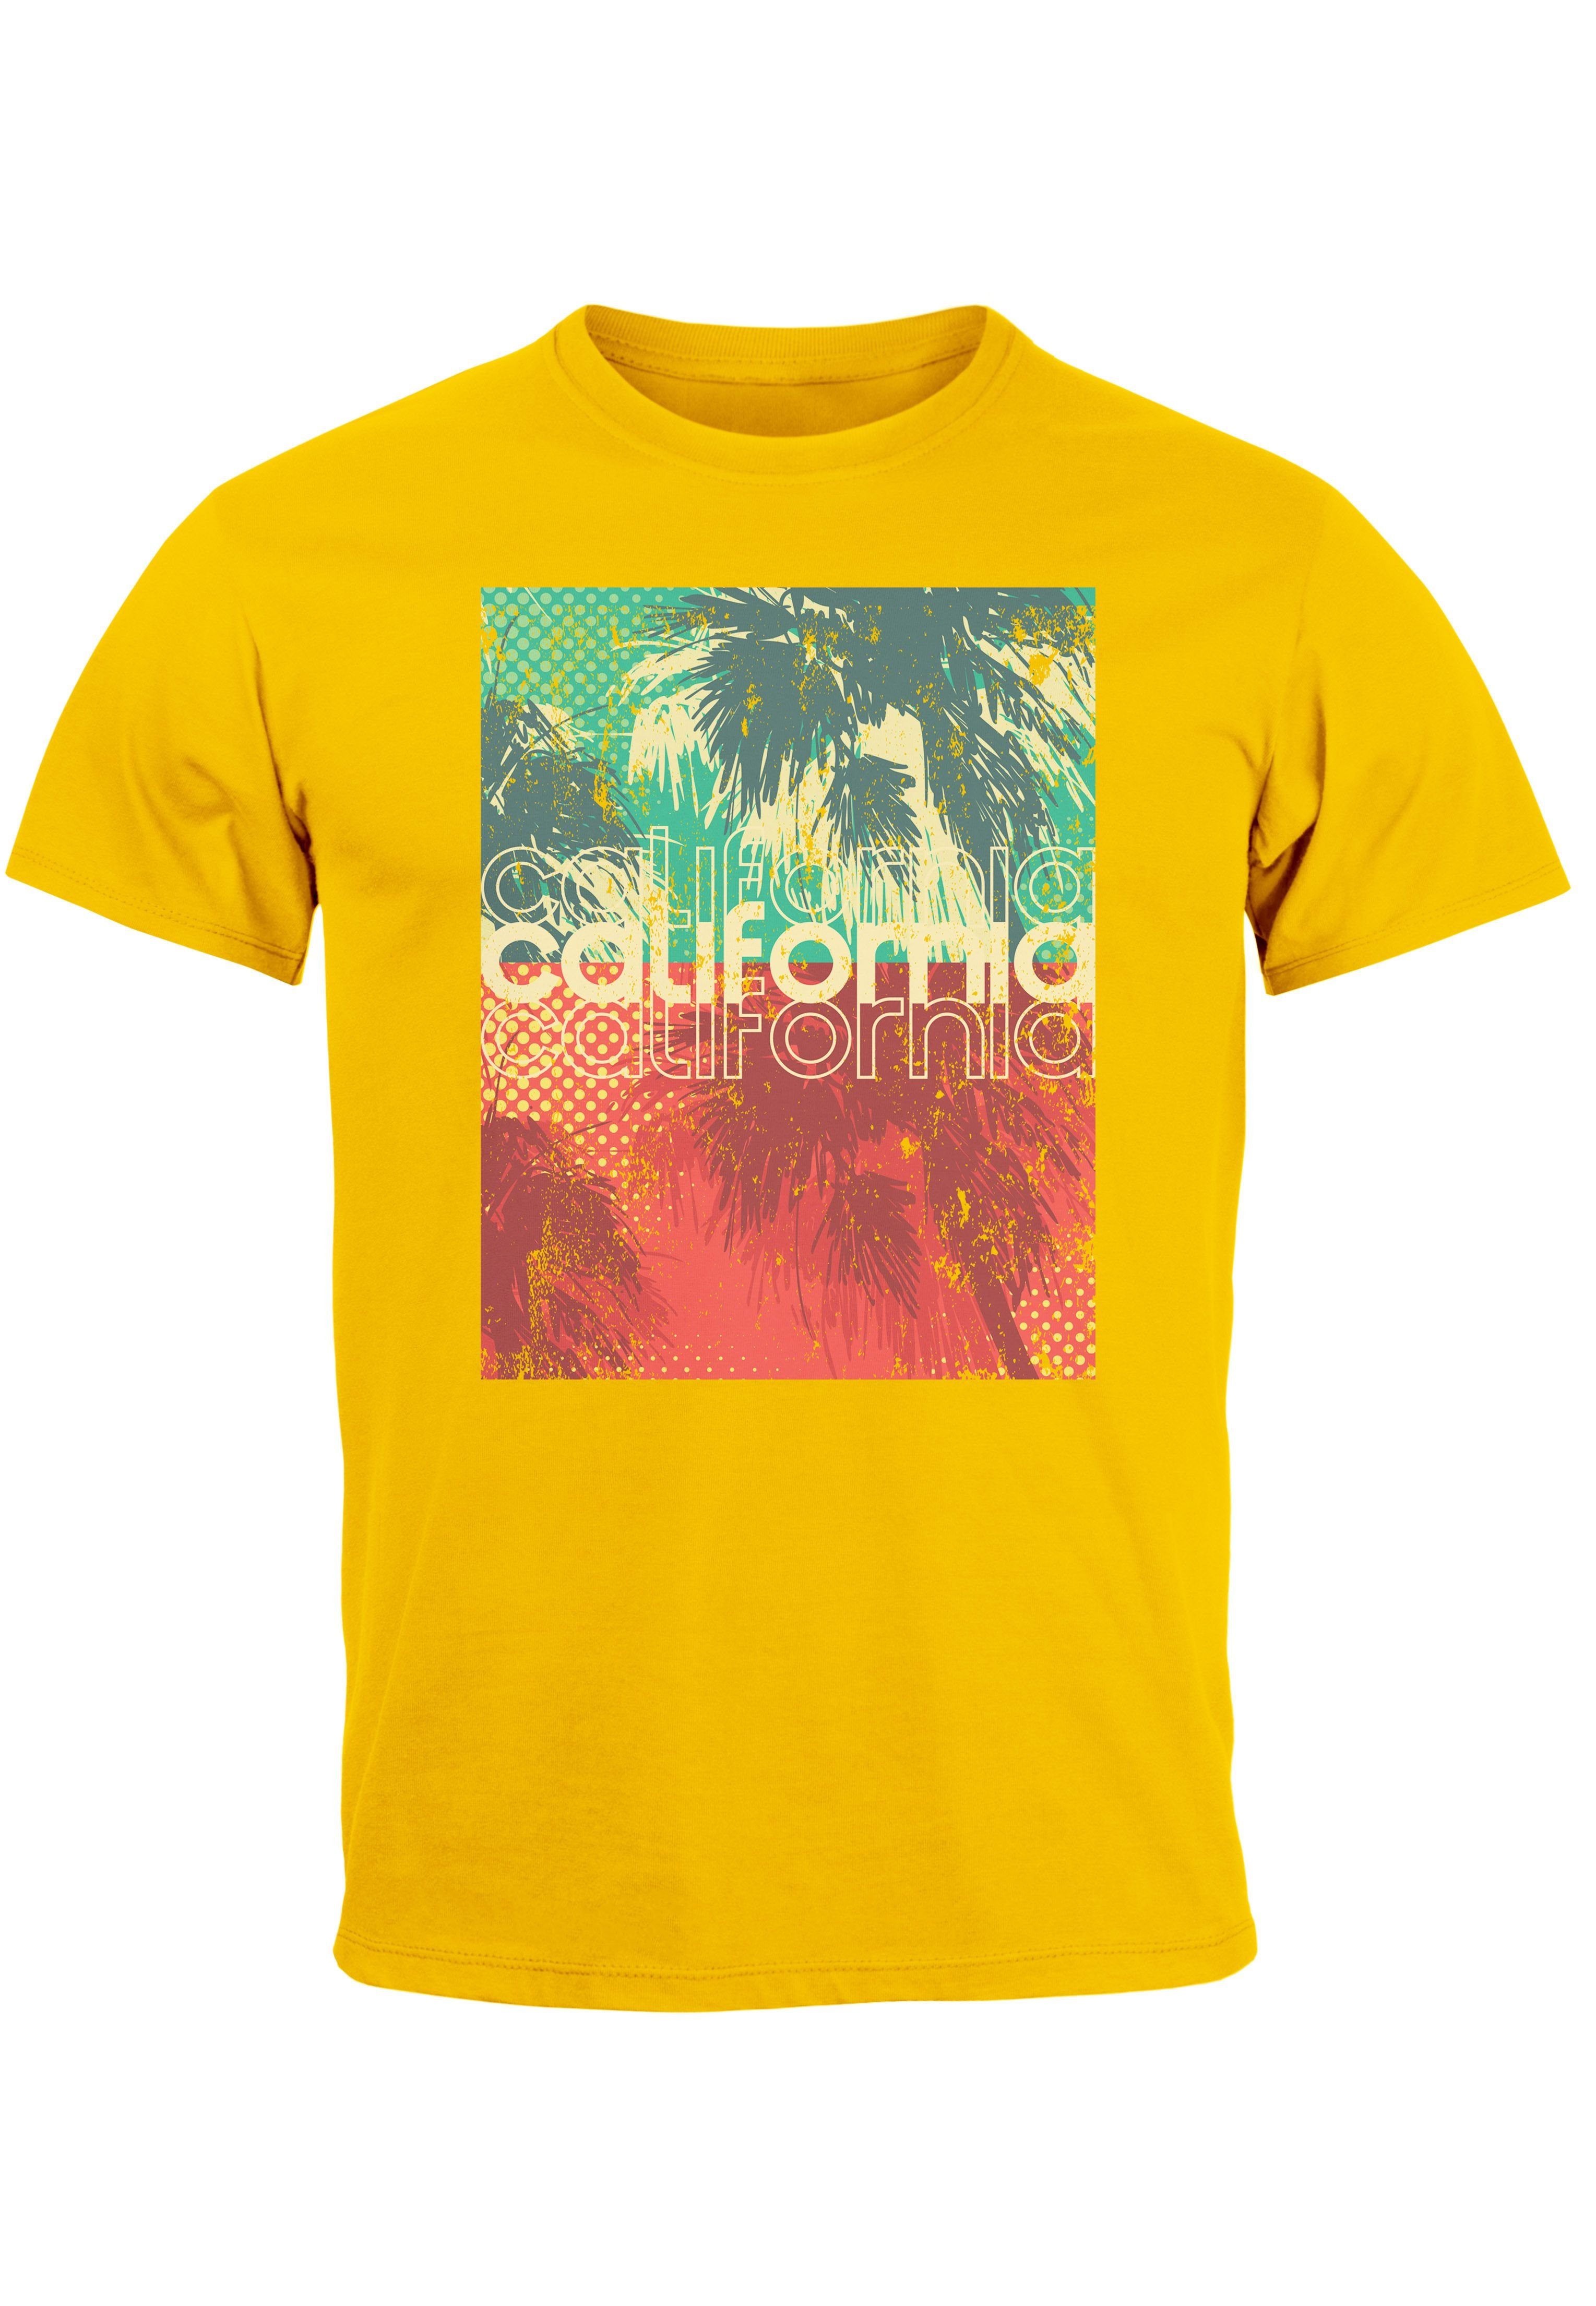 Neverless Print-Shirt Herren T-Shirt Top California Palmen Sommer Foto Print Aufdruck Abstra mit Print gelb